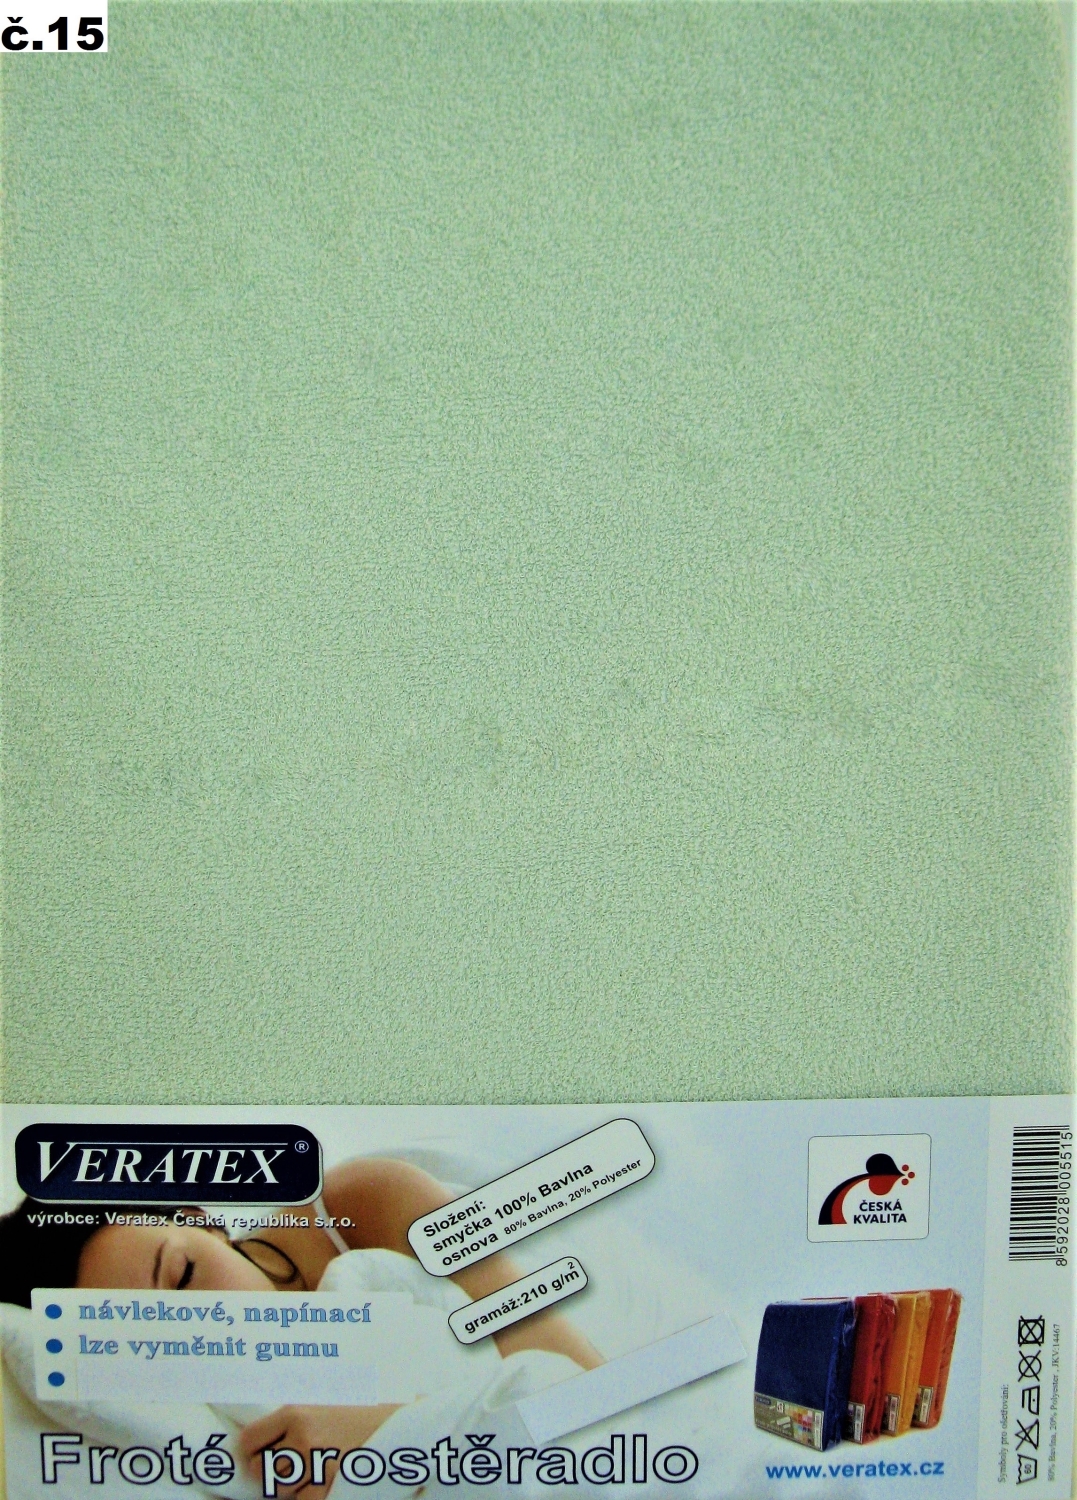 Veratex Froté prostěradlo 120x220/16 cm (č.15 sv.zelená) 120 x 220 cm